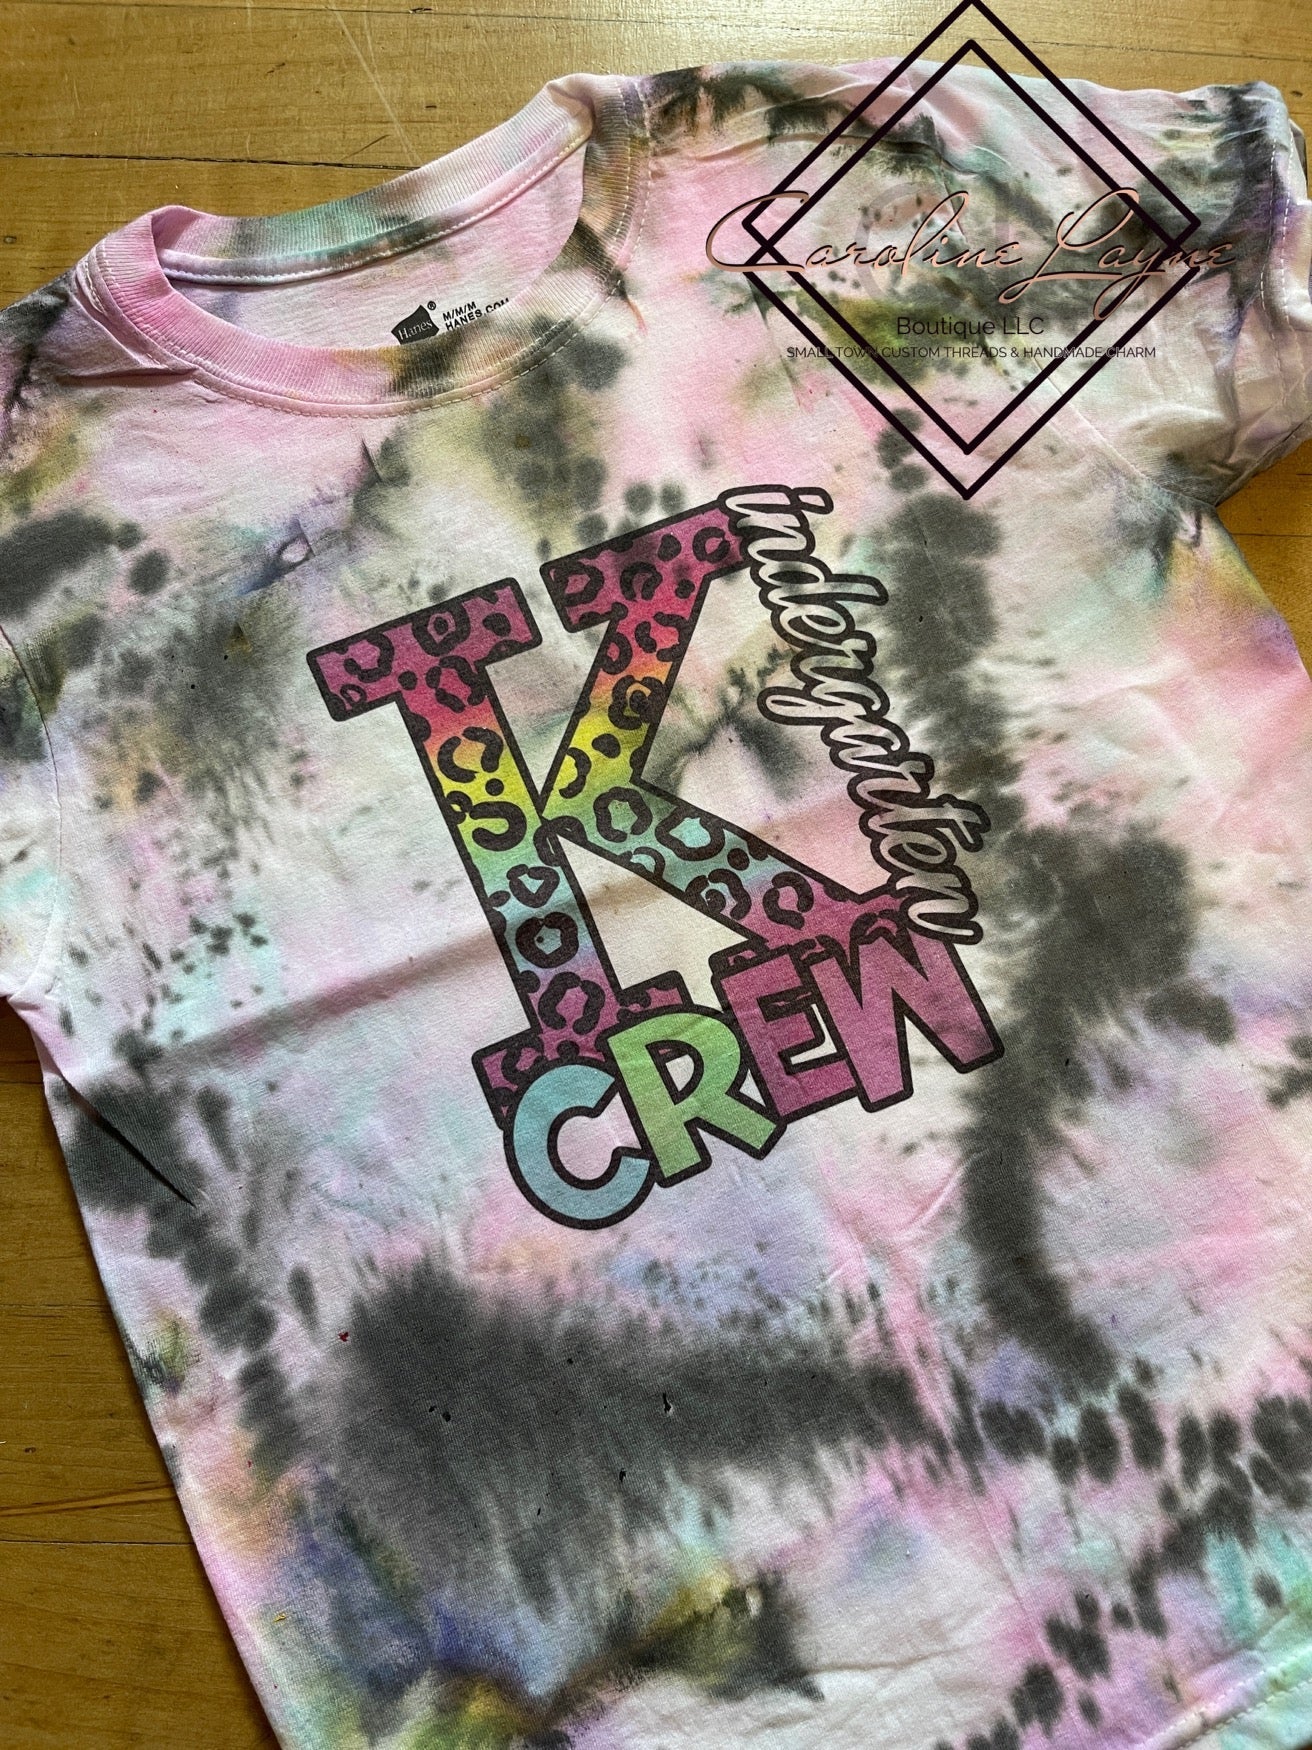 Kindergarten crew Tie Dye Tee - Caroline Layne Boutique LLC